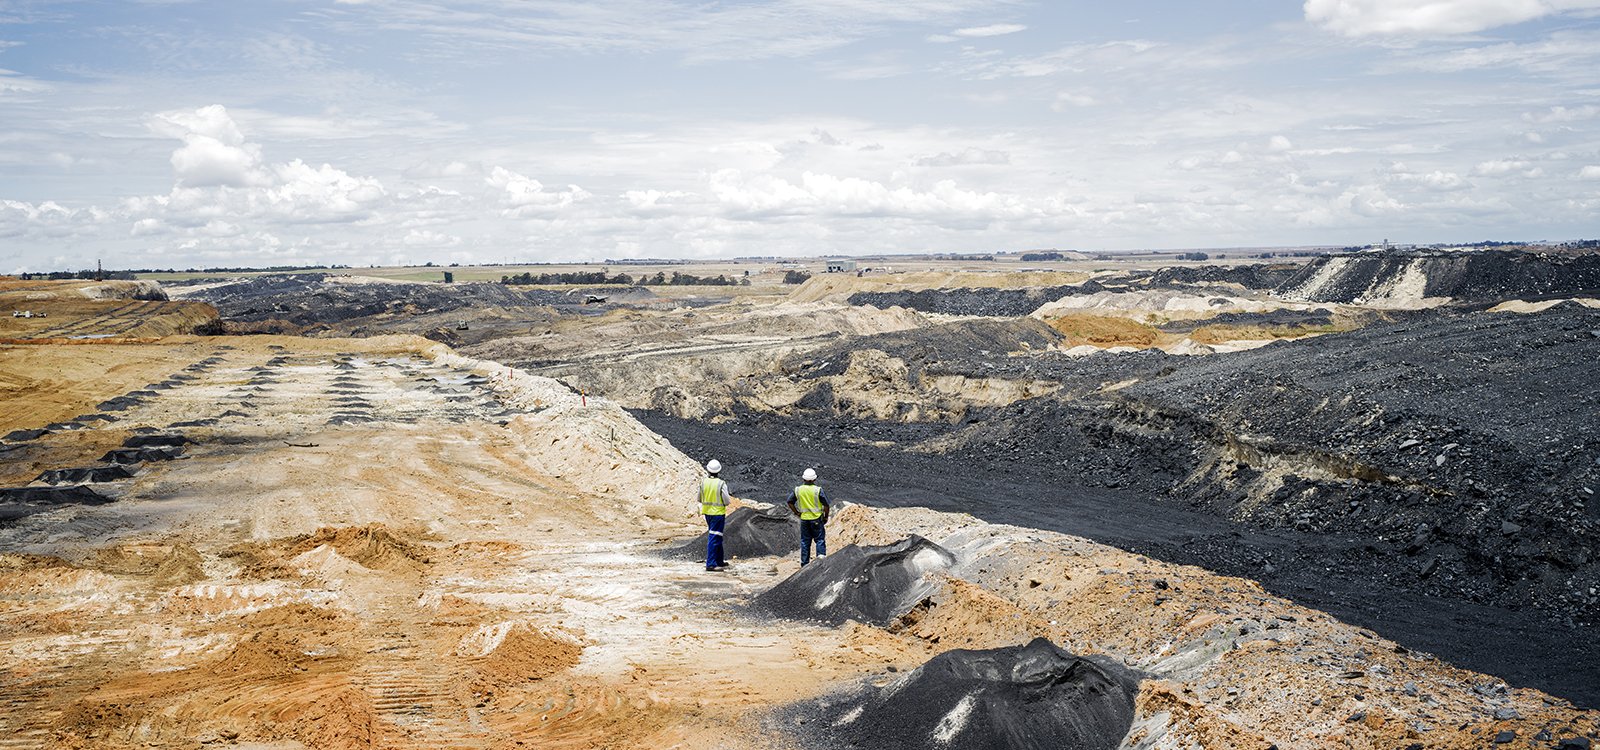 Mafube煤矿采用滚动推进技术。截割作业时，将覆盖层推到前一次截割区，这种方式可对采空区进行连续修复，一个中等规模的卡车和铲车车队便可以完成挖掘作业。